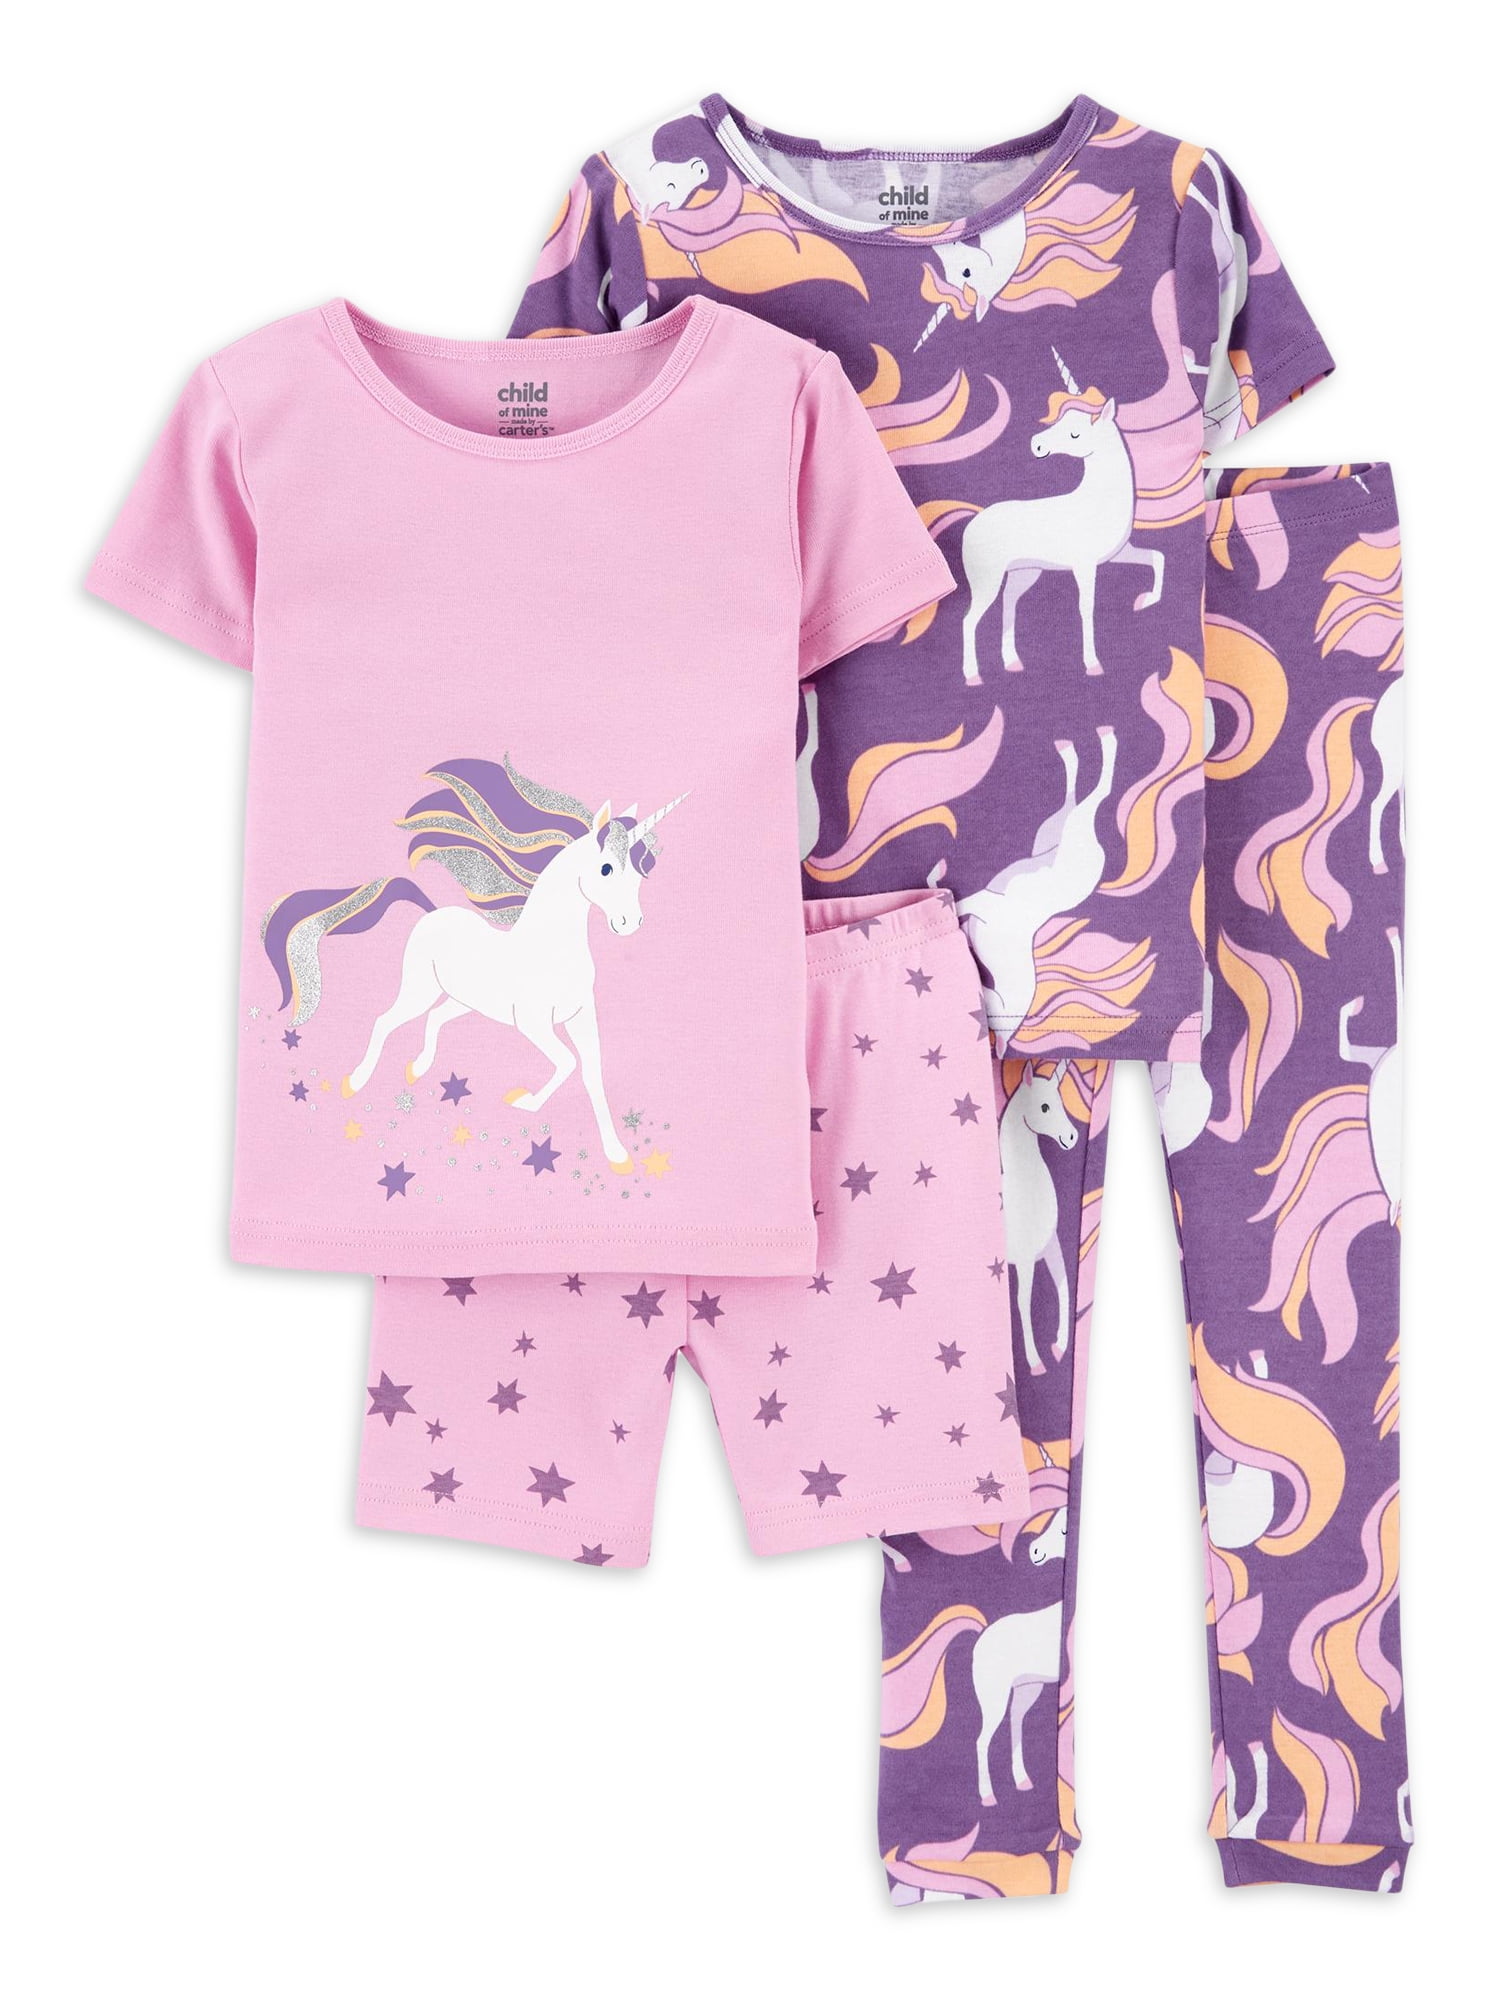 New Carter's Girls Cat kitty Pajama 2pc Set Navy Blue Snug fit 4T,6,7,8 